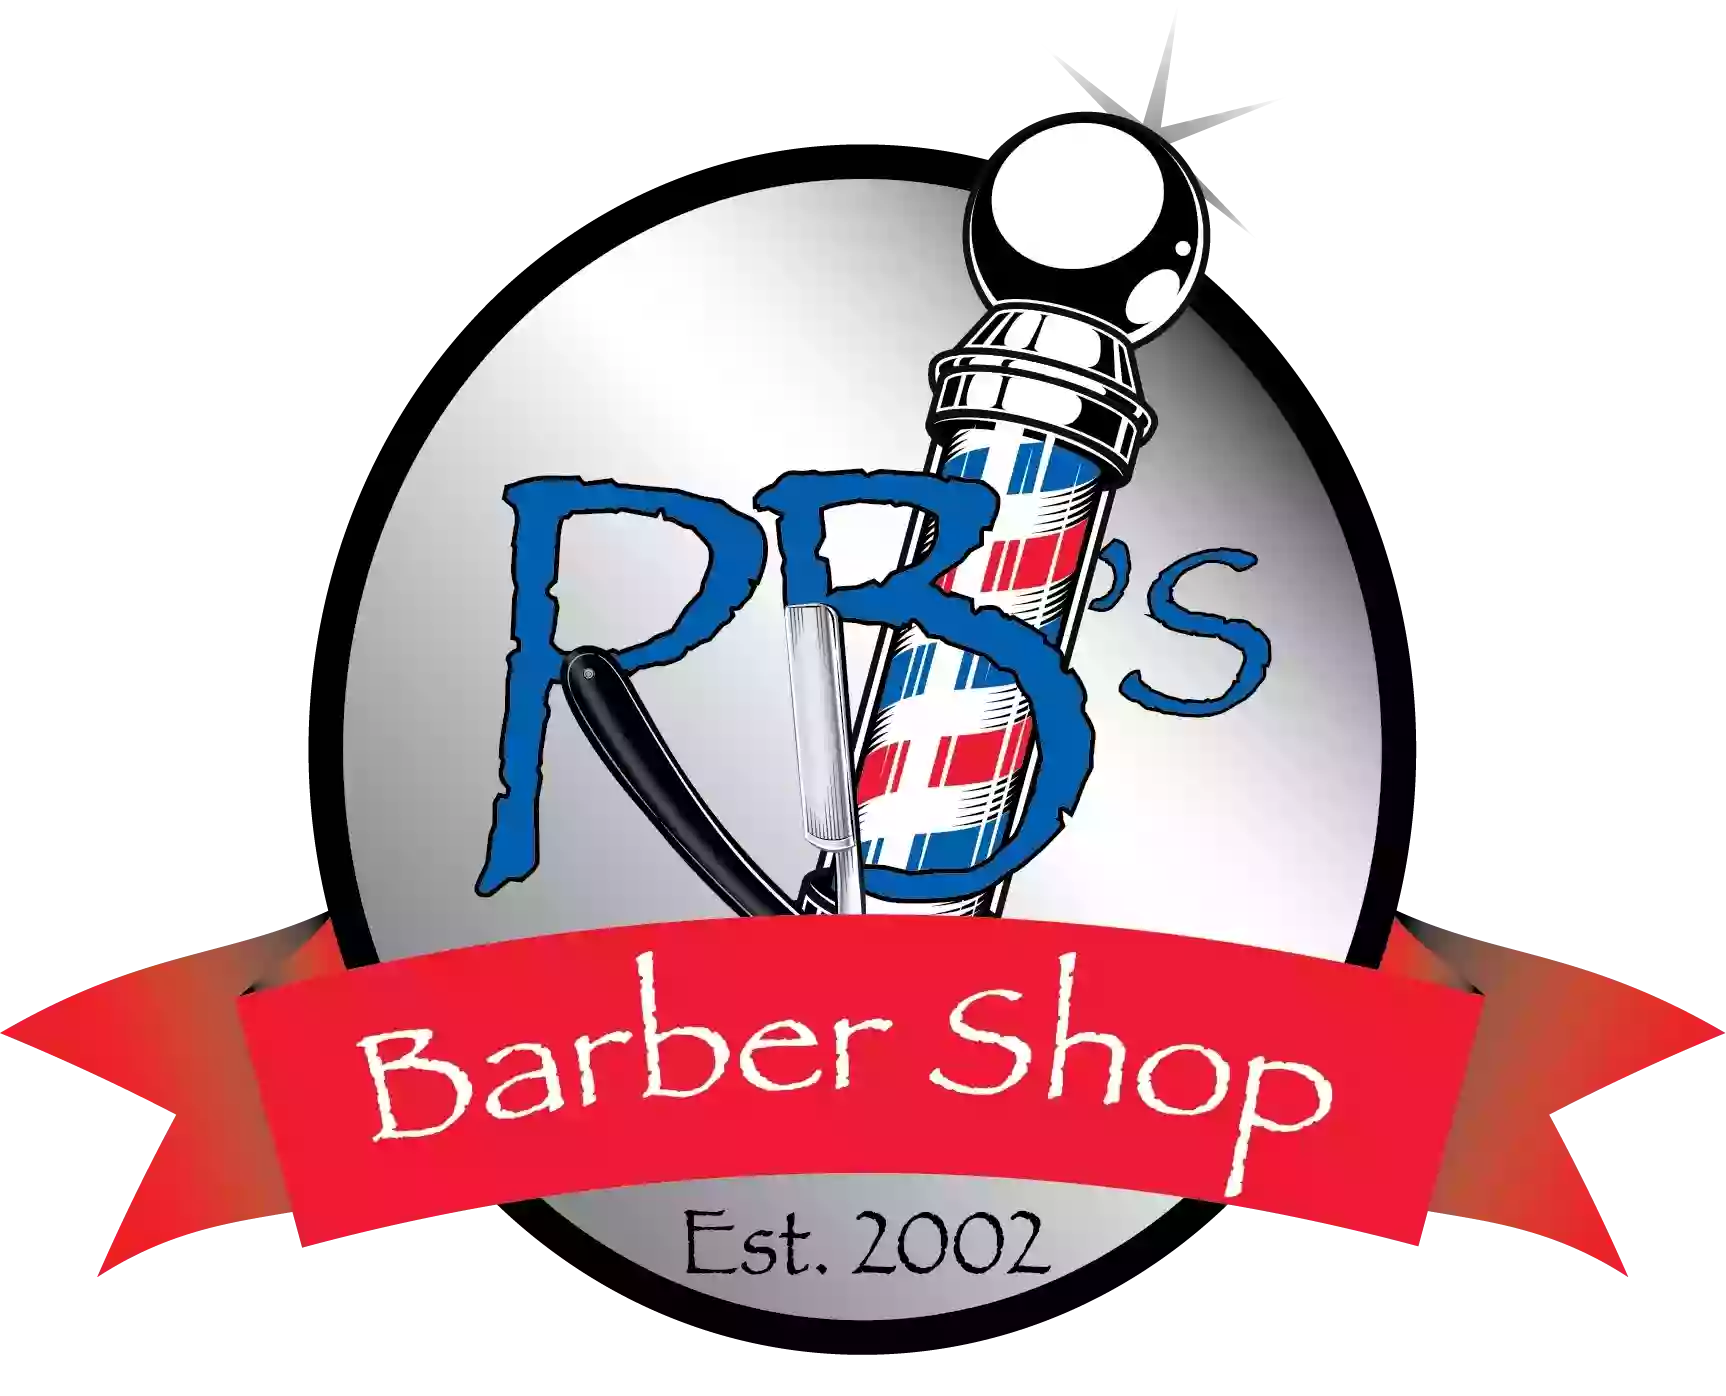 Rbs Barbershop